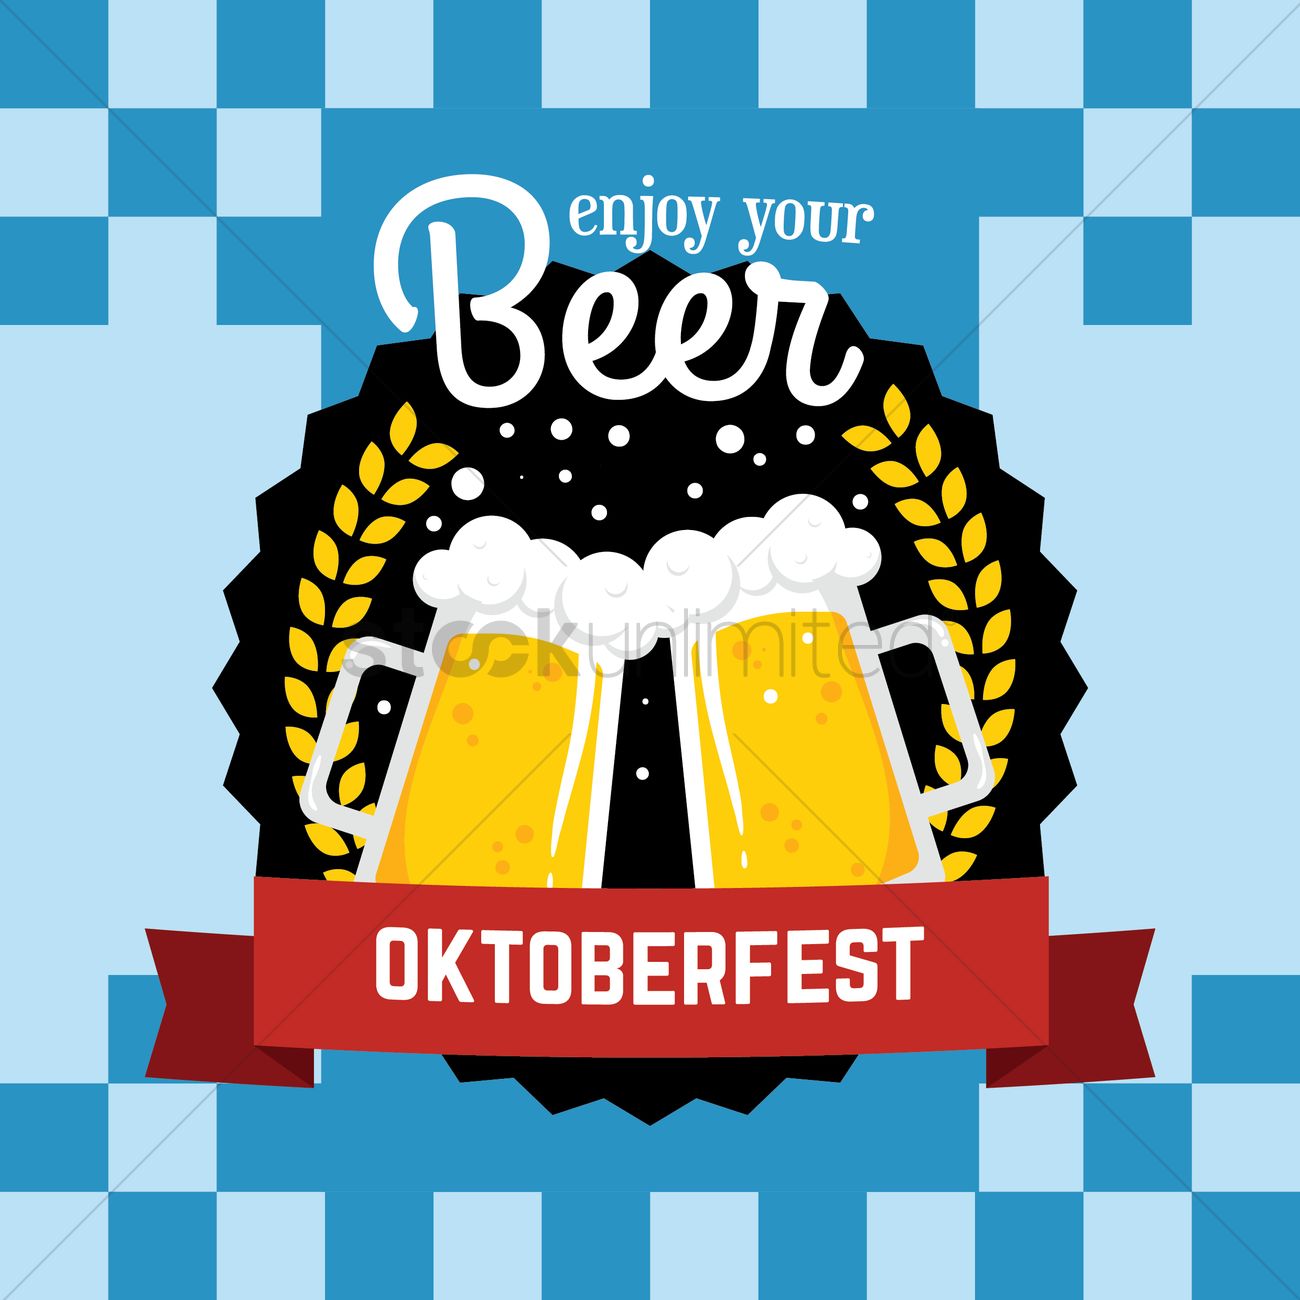 Enjoy Your Beer Oktoberfest Wishes Illustration